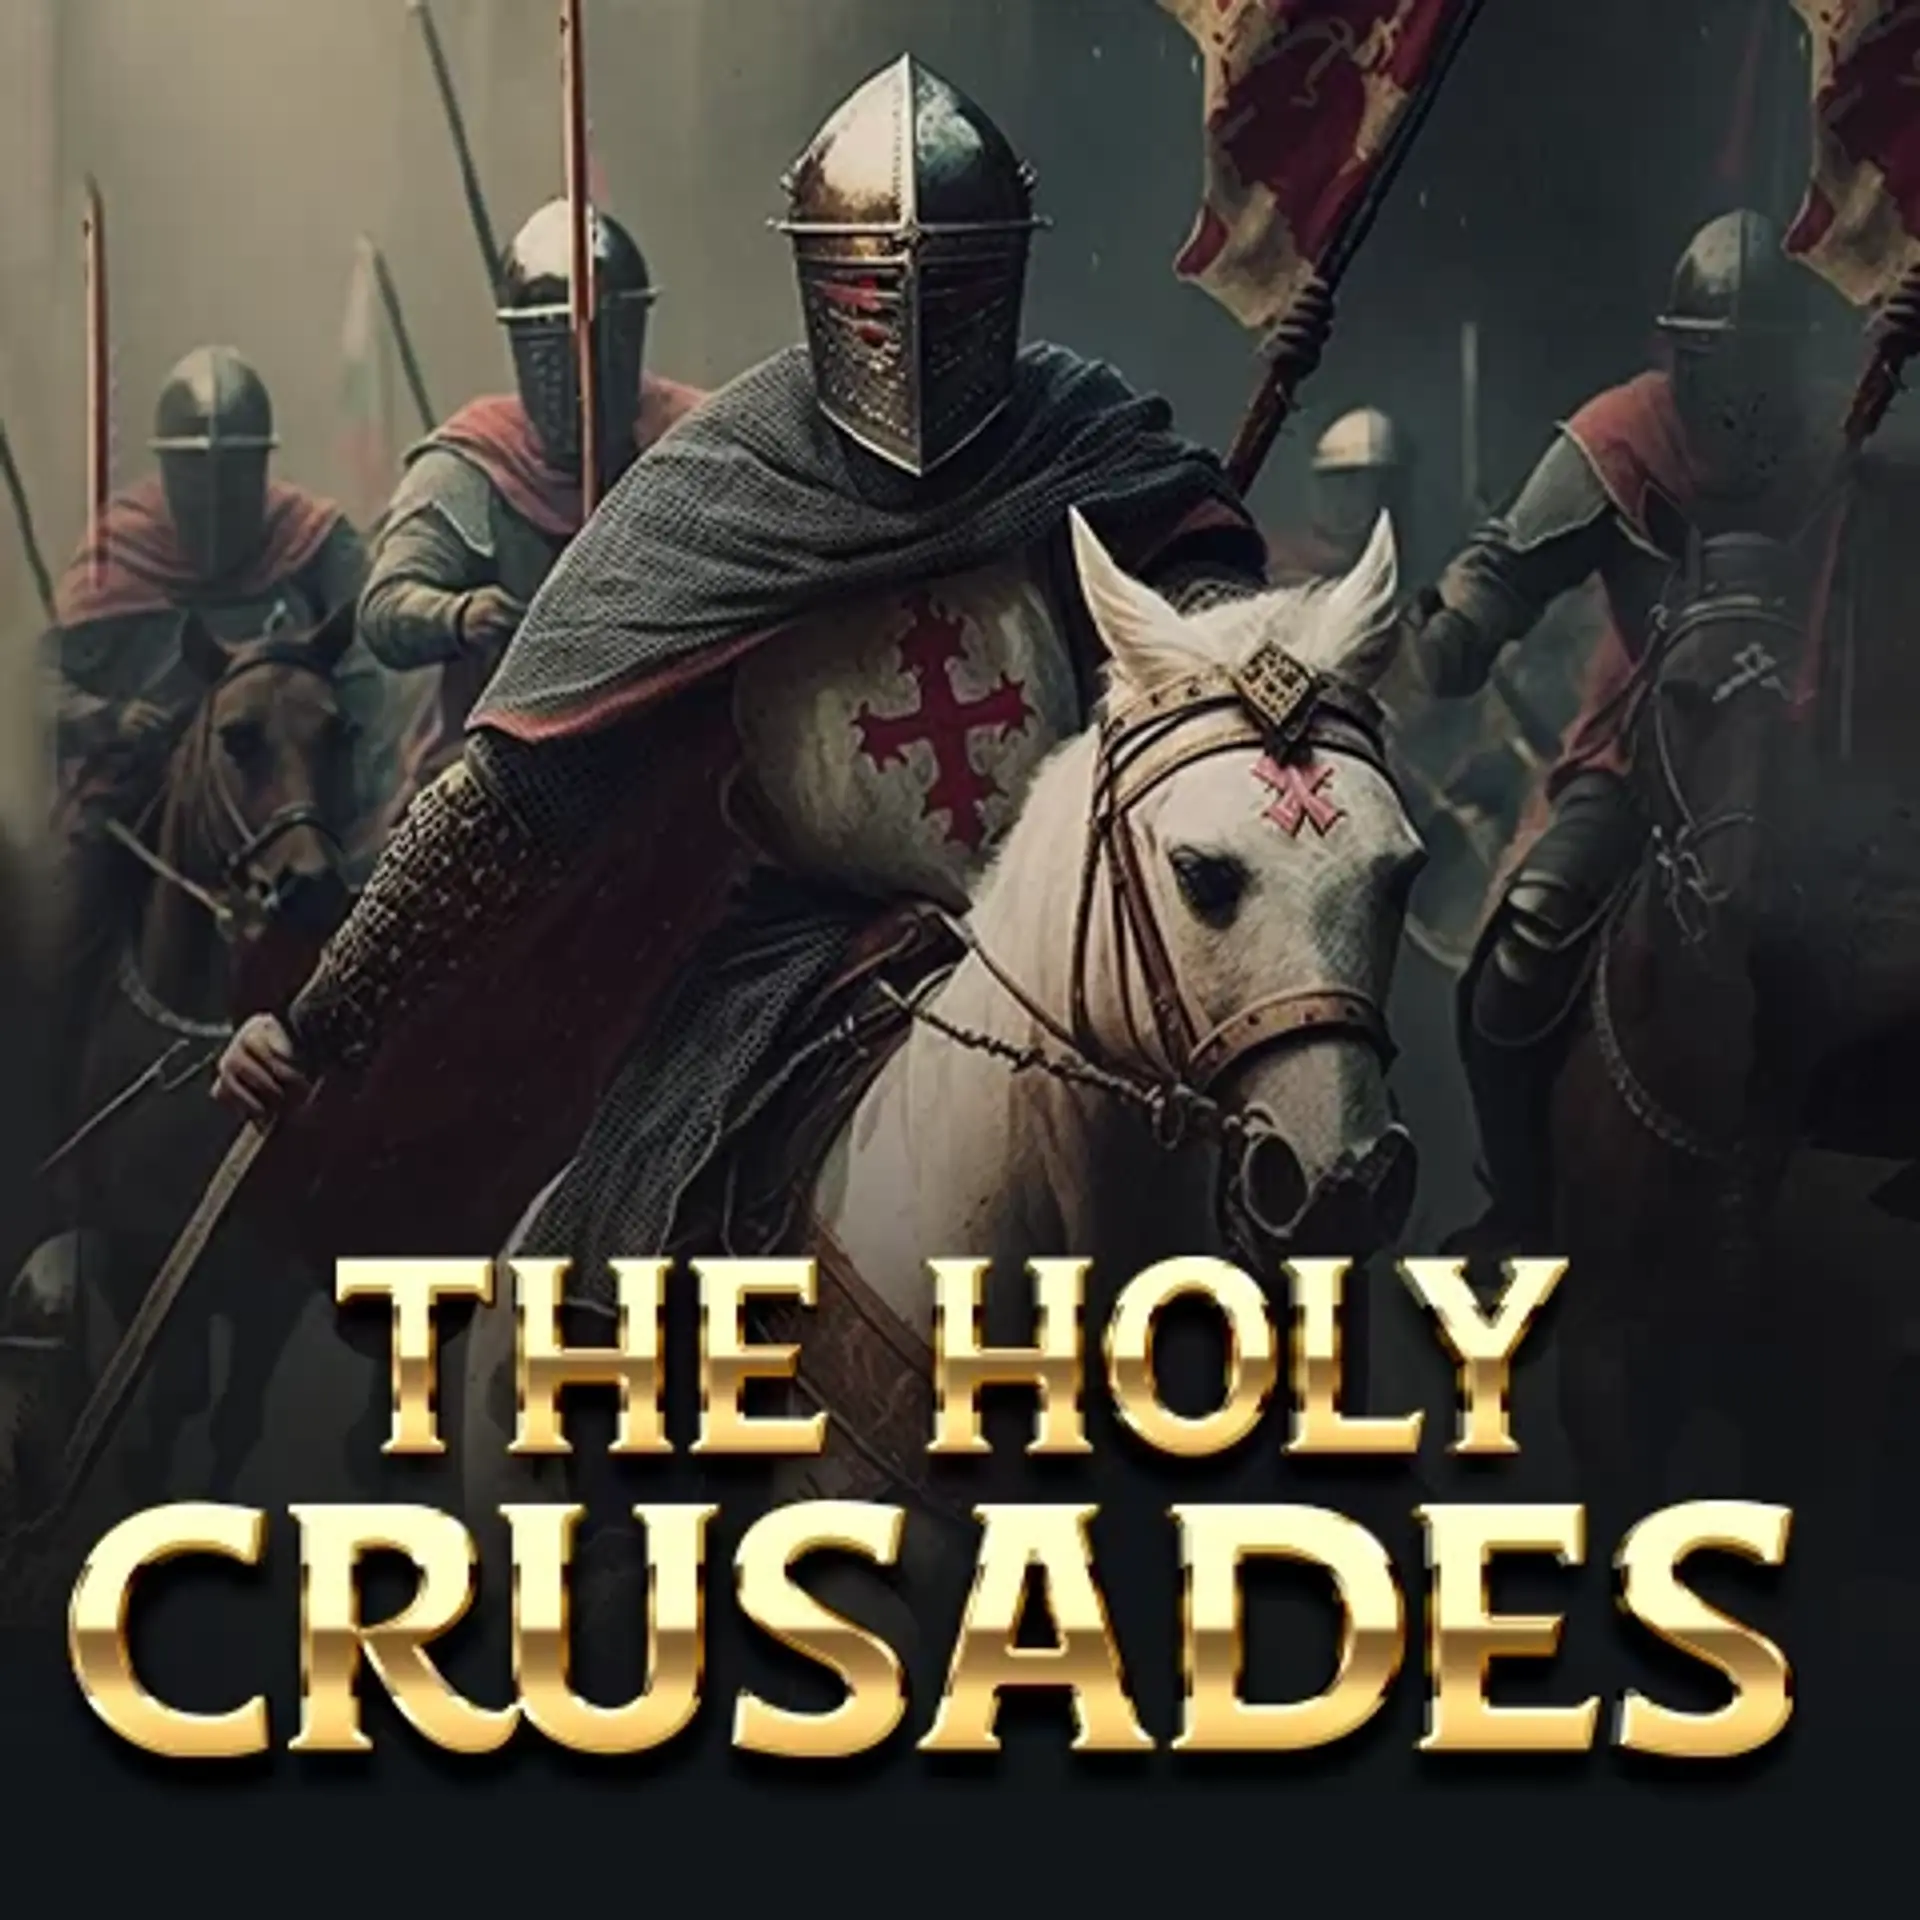 6. The Third Crusade